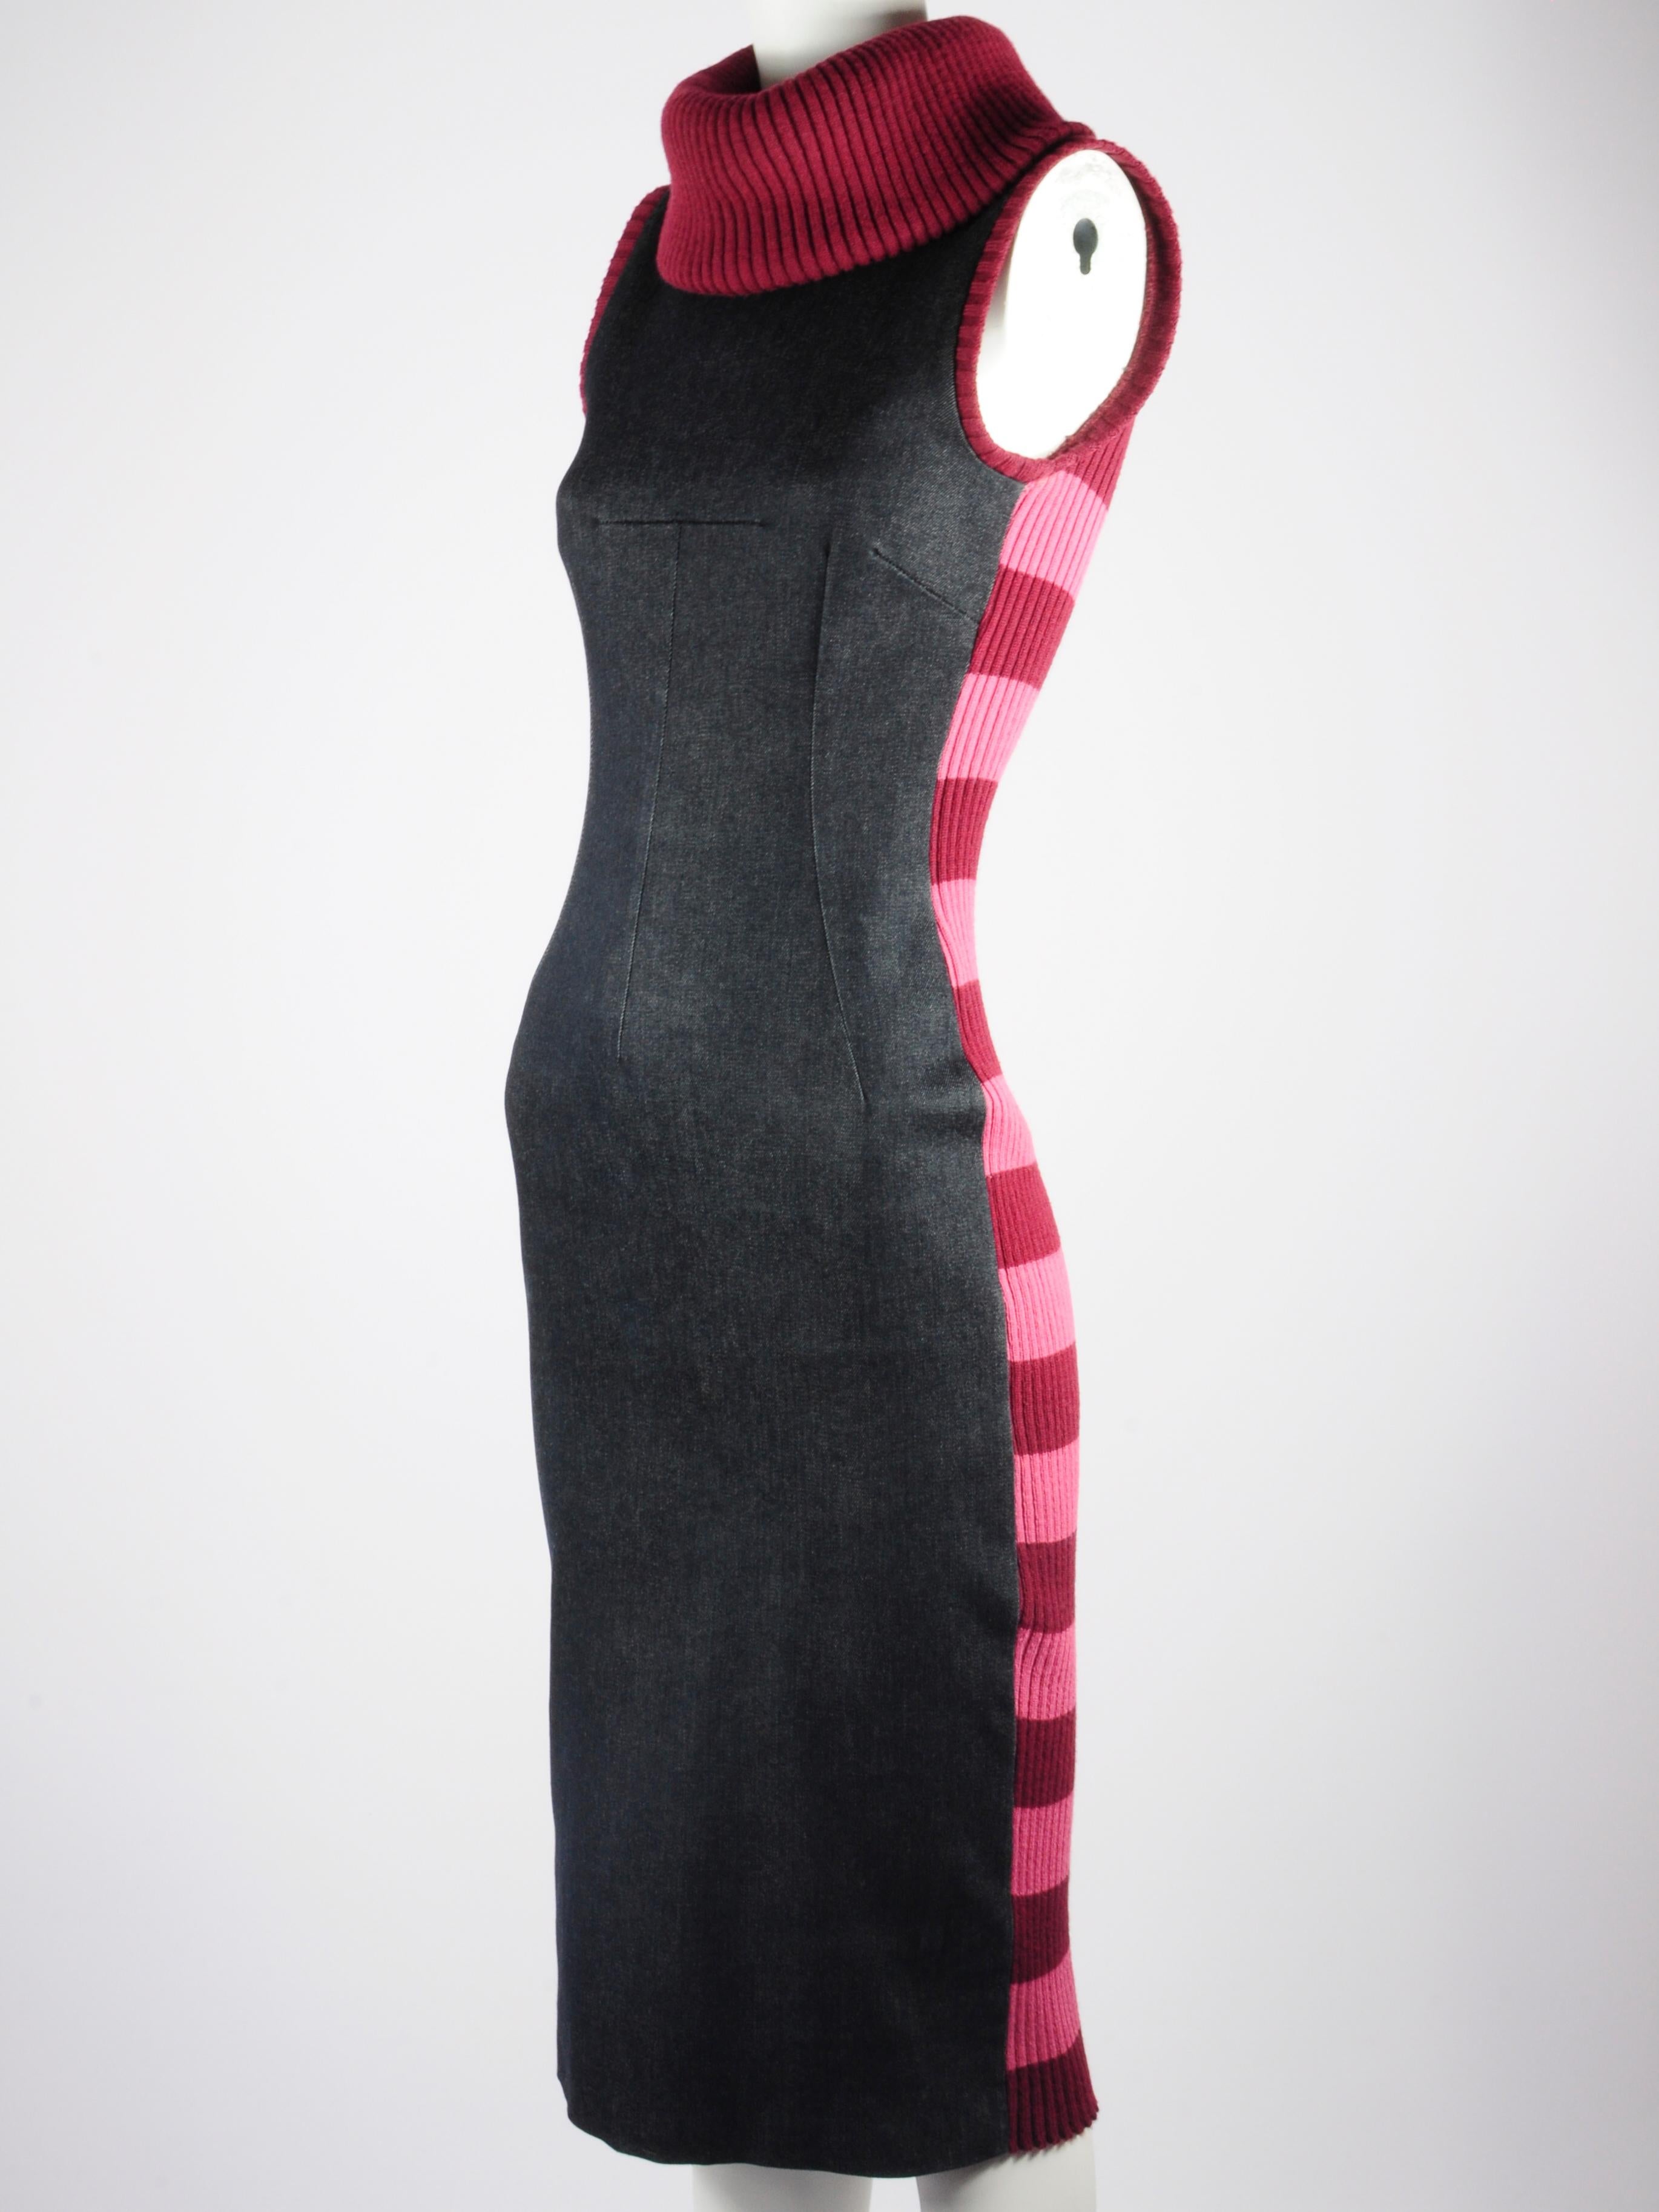 D&G Dolce & Gabbana Denim and Knitwear Dress Striped Turtleneck Sleeveless 1990s For Sale 11